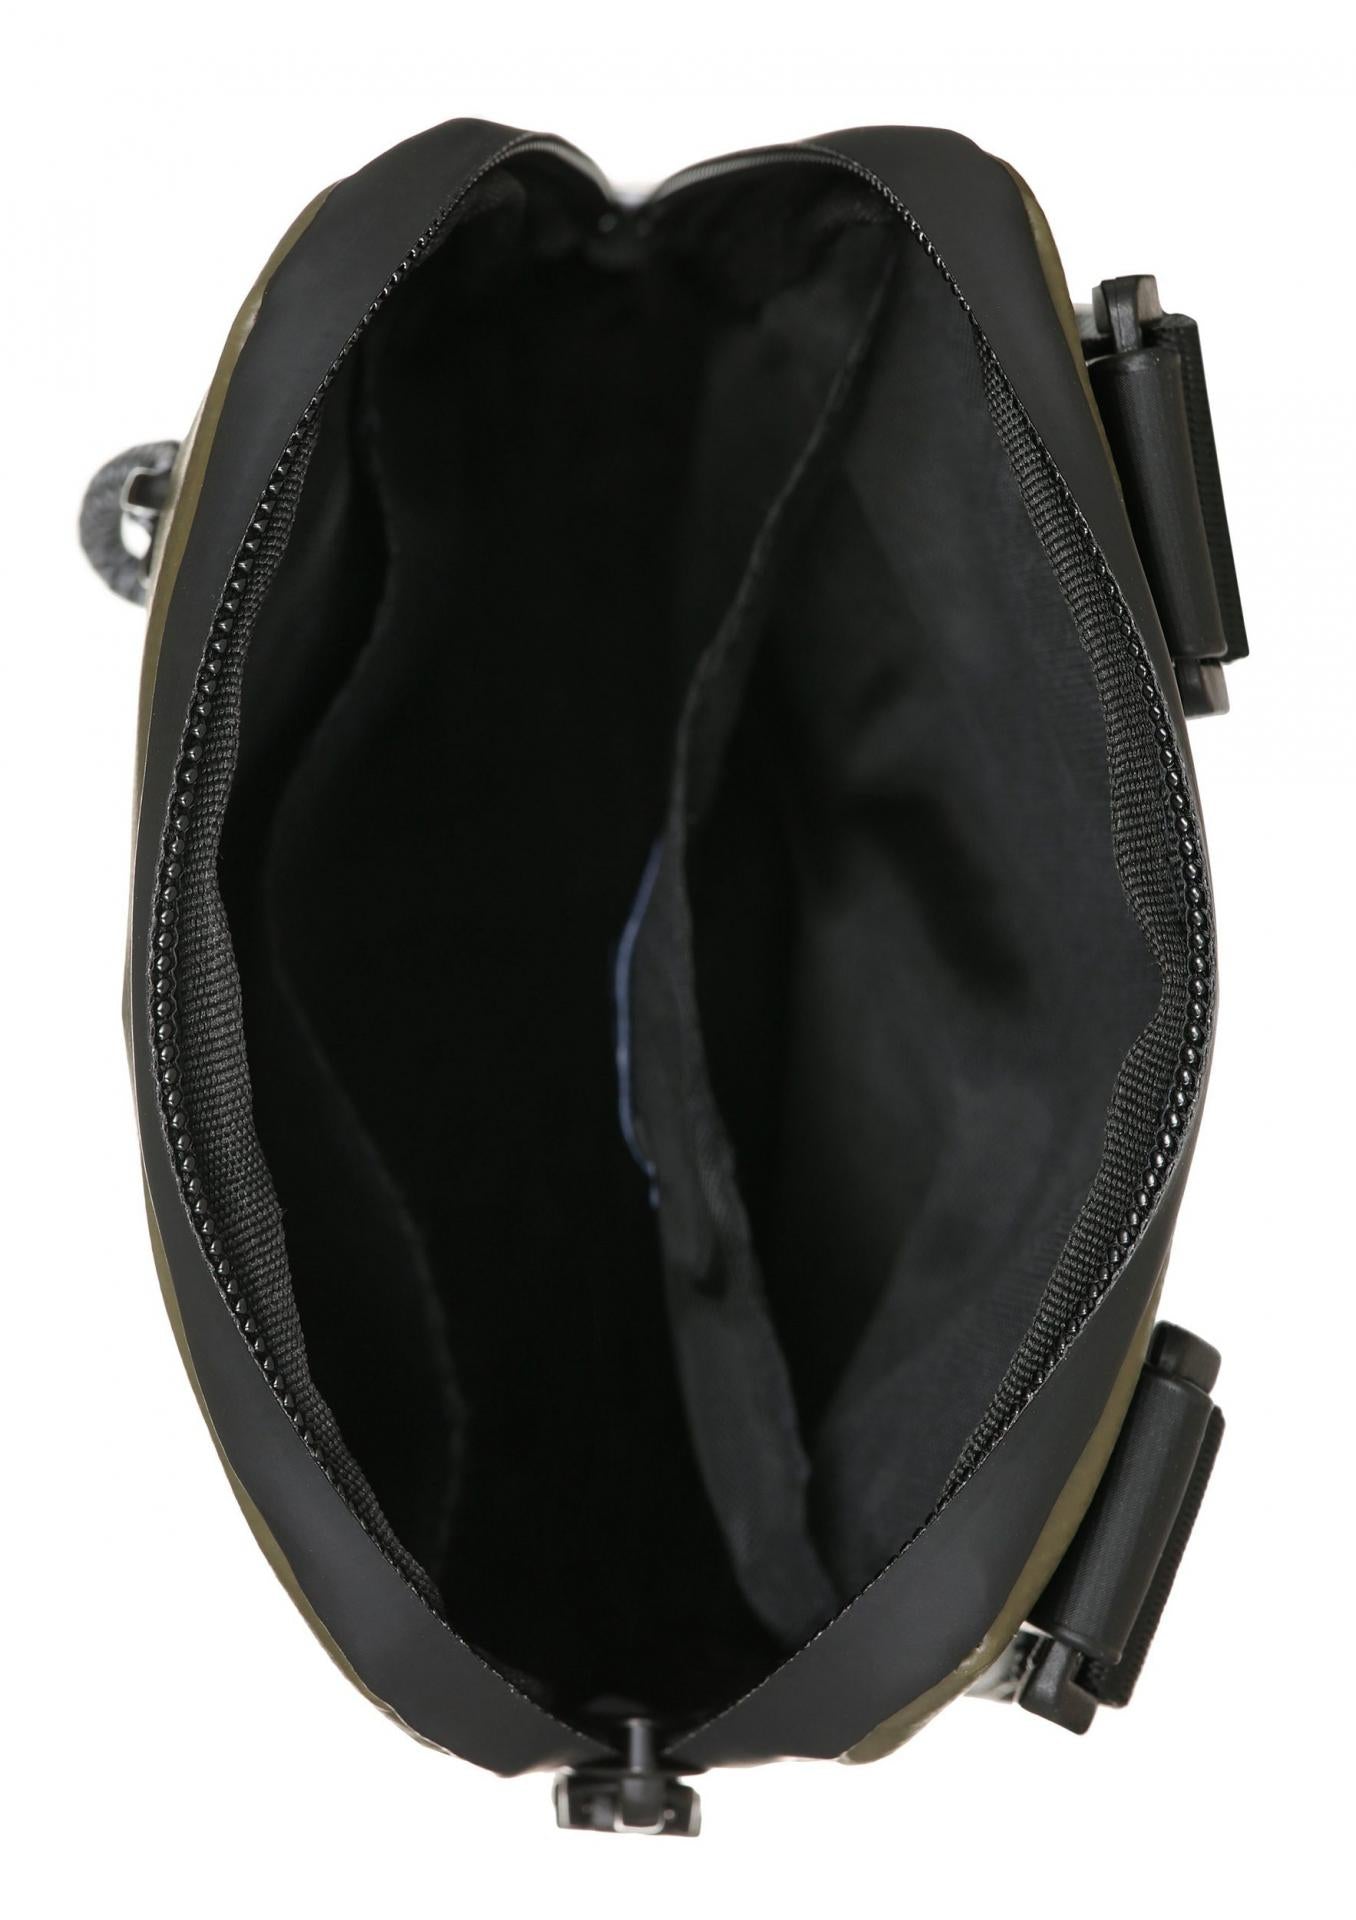 Strellson shoulderbag xsvz stockwell 2.0 brian Khaki